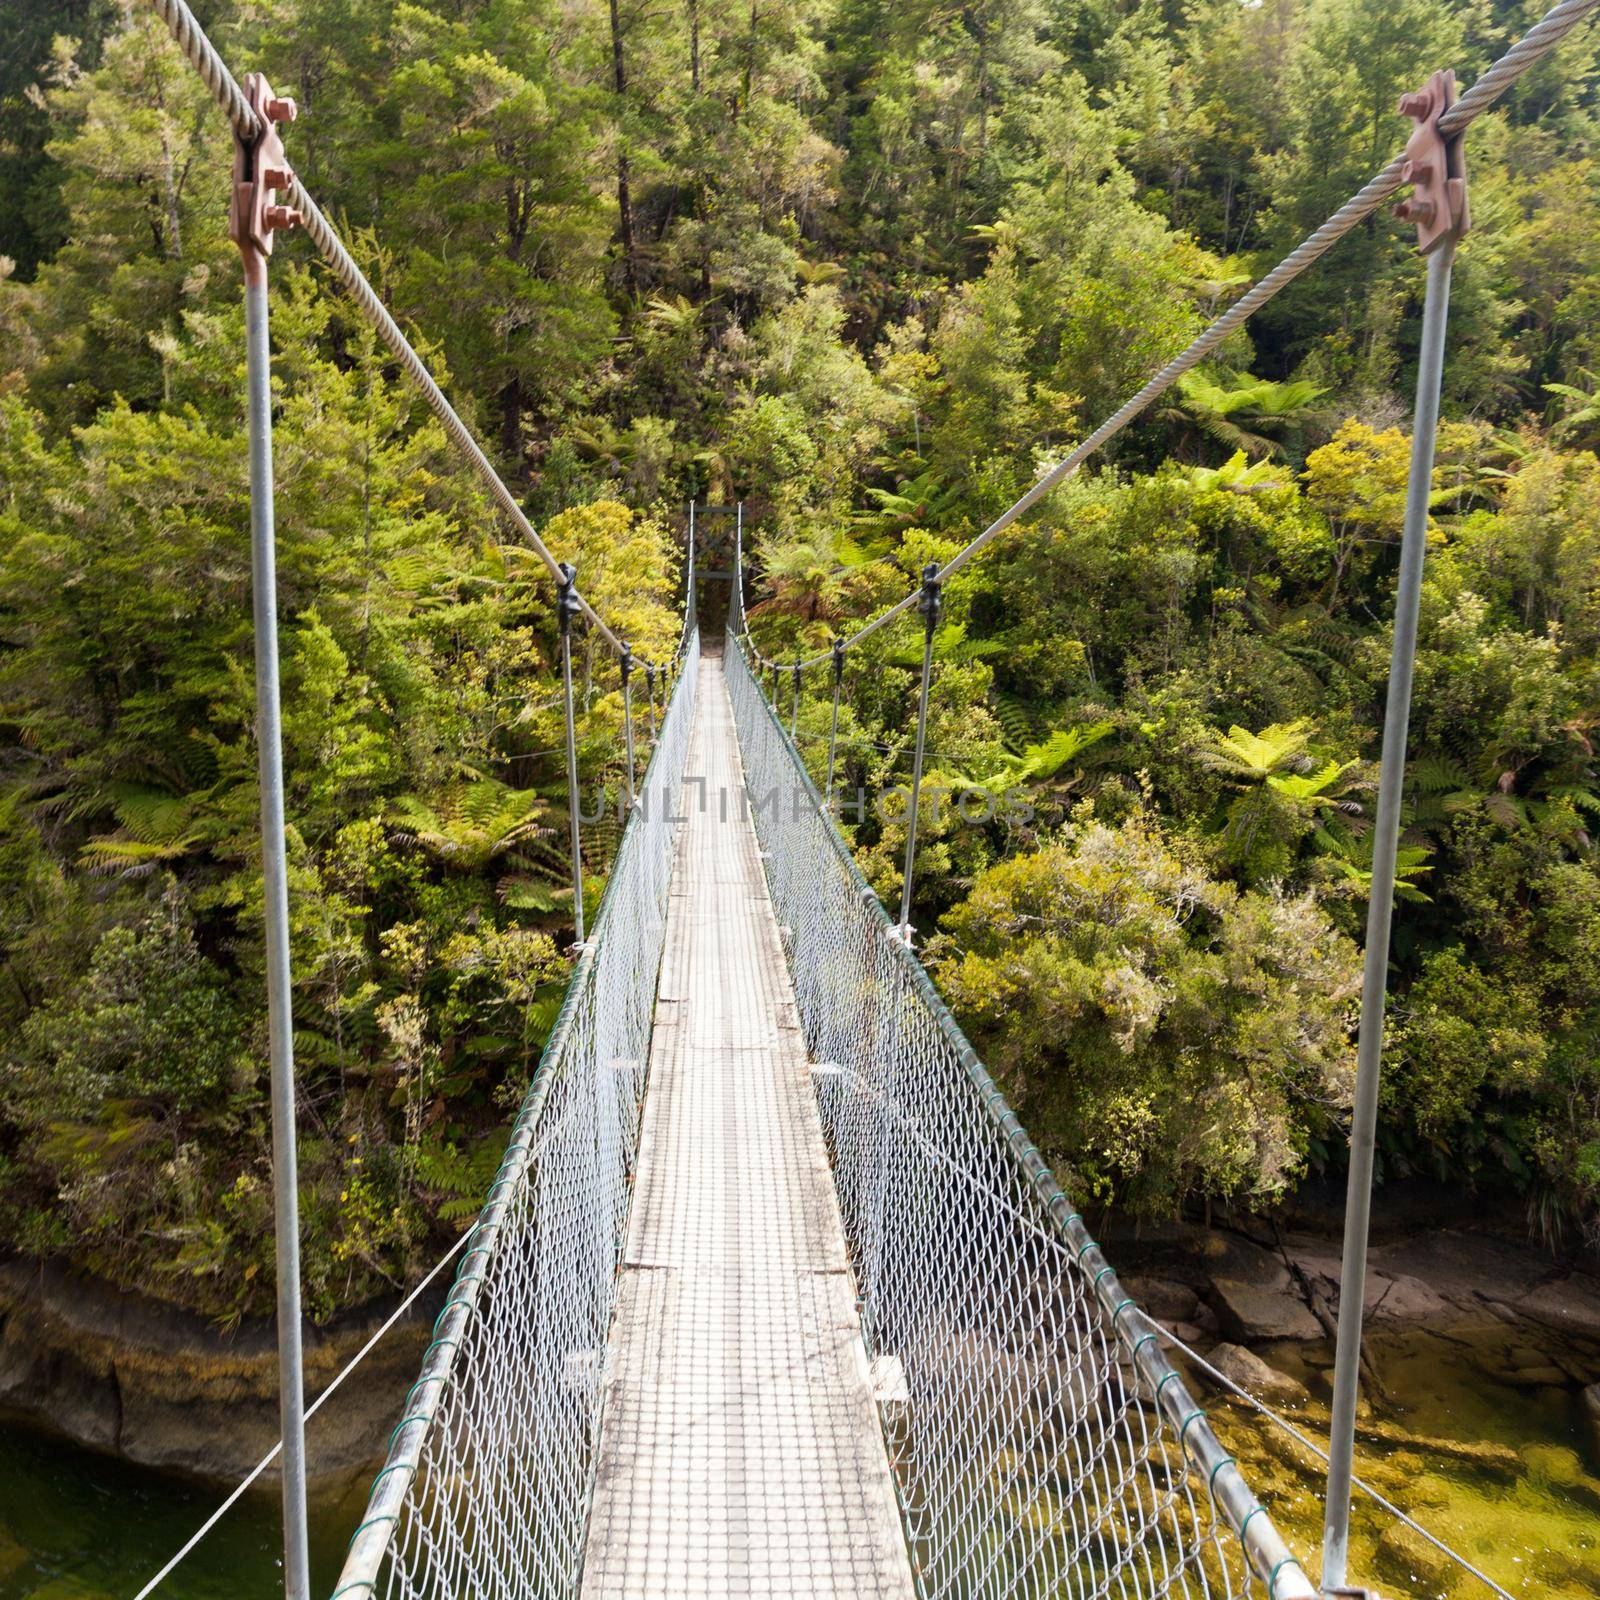 Swing bridge over green jungle river New Zealand by PiLens